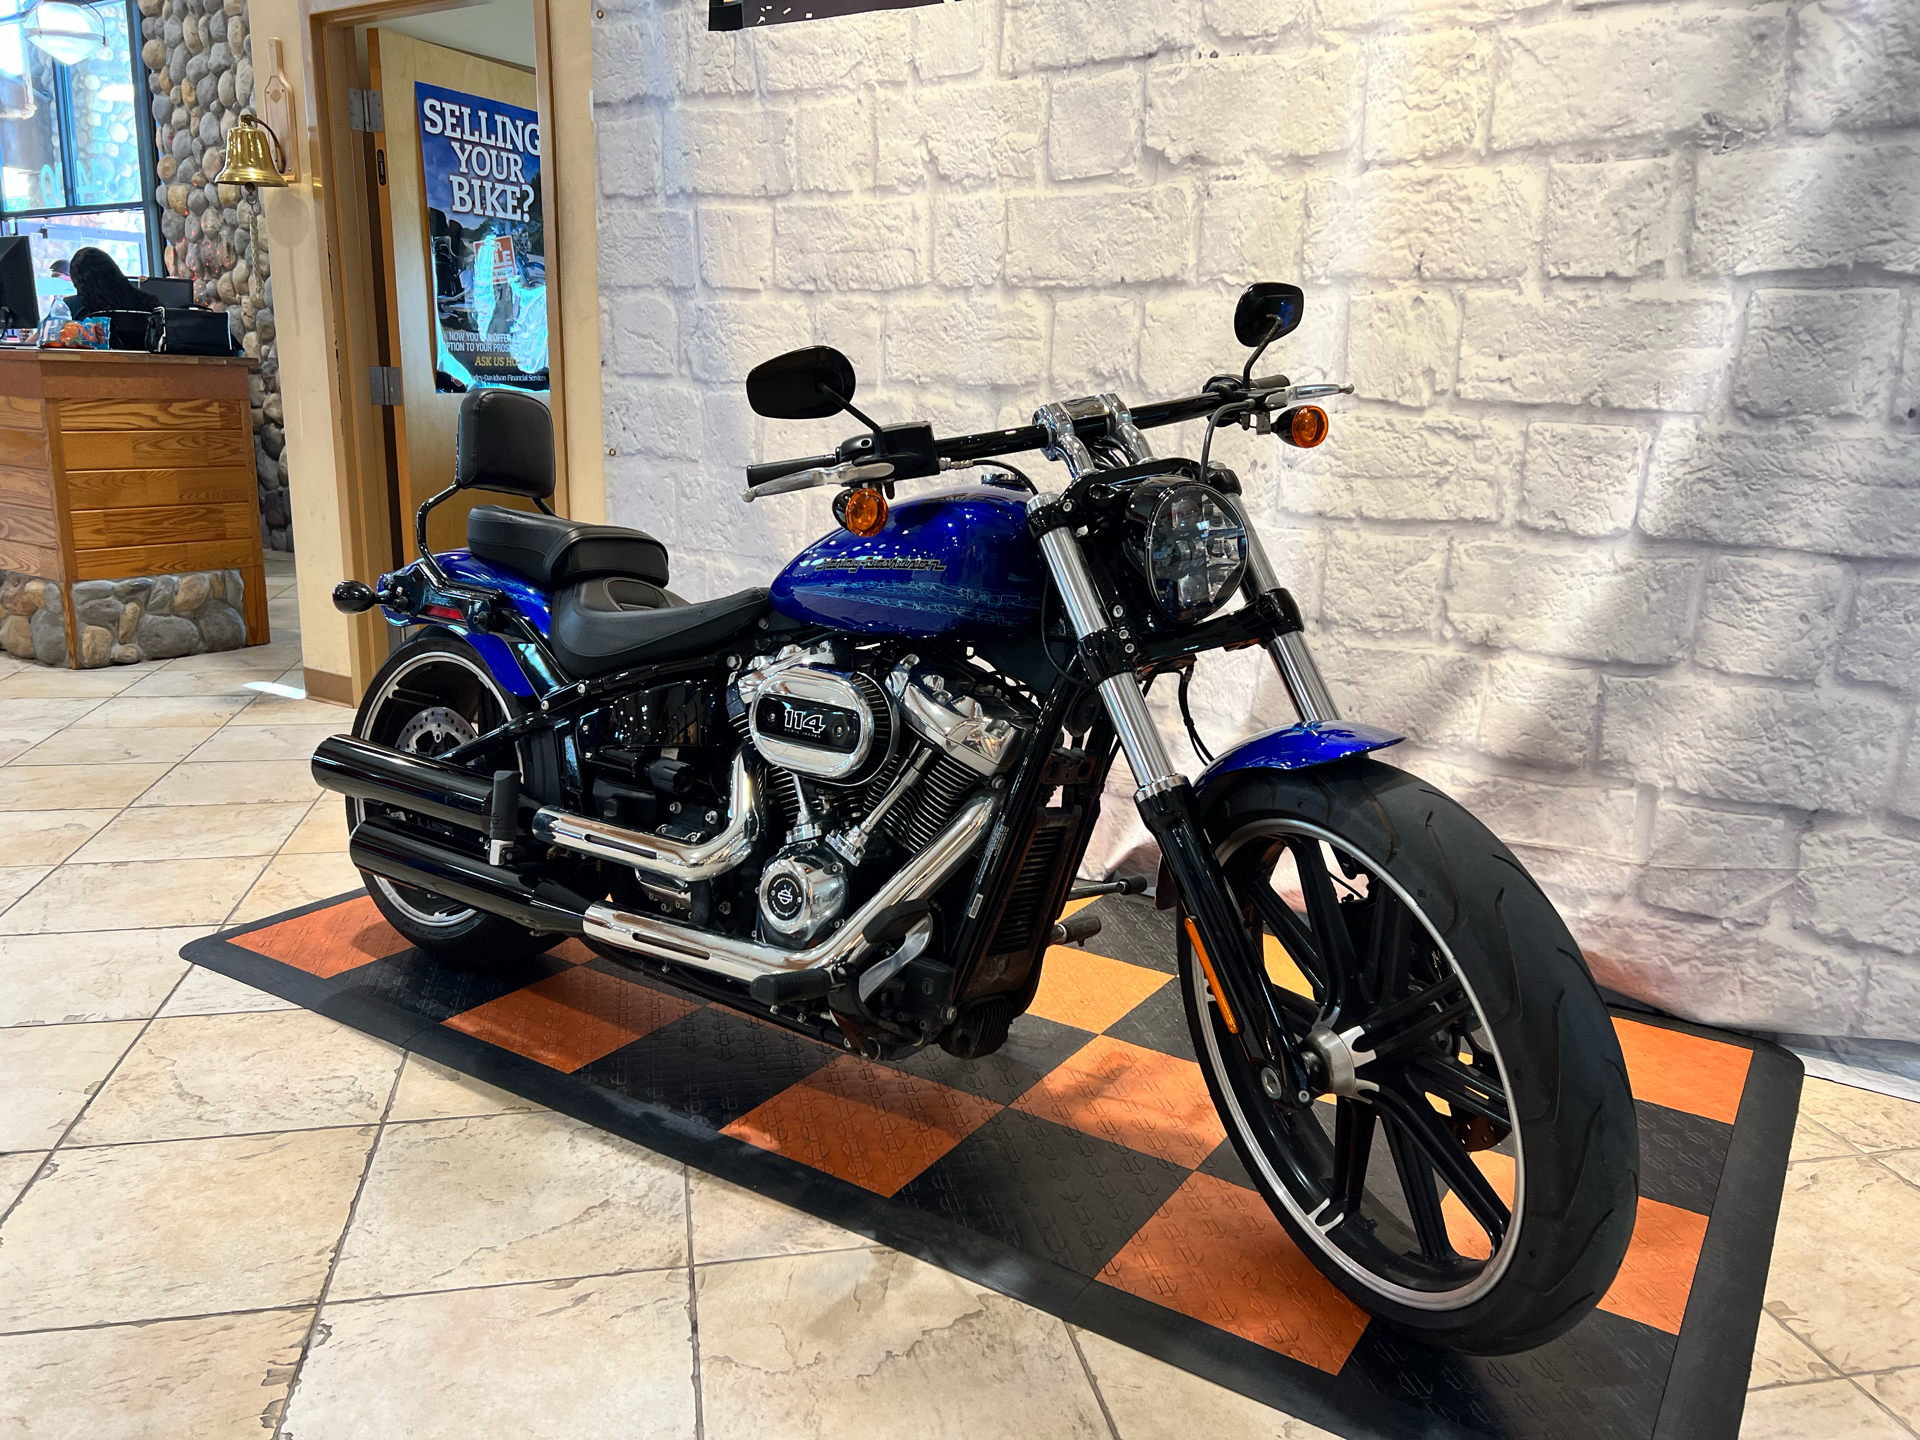 2019 Harley-Davidson Breakout® 114 in Houston, Texas - Photo 3